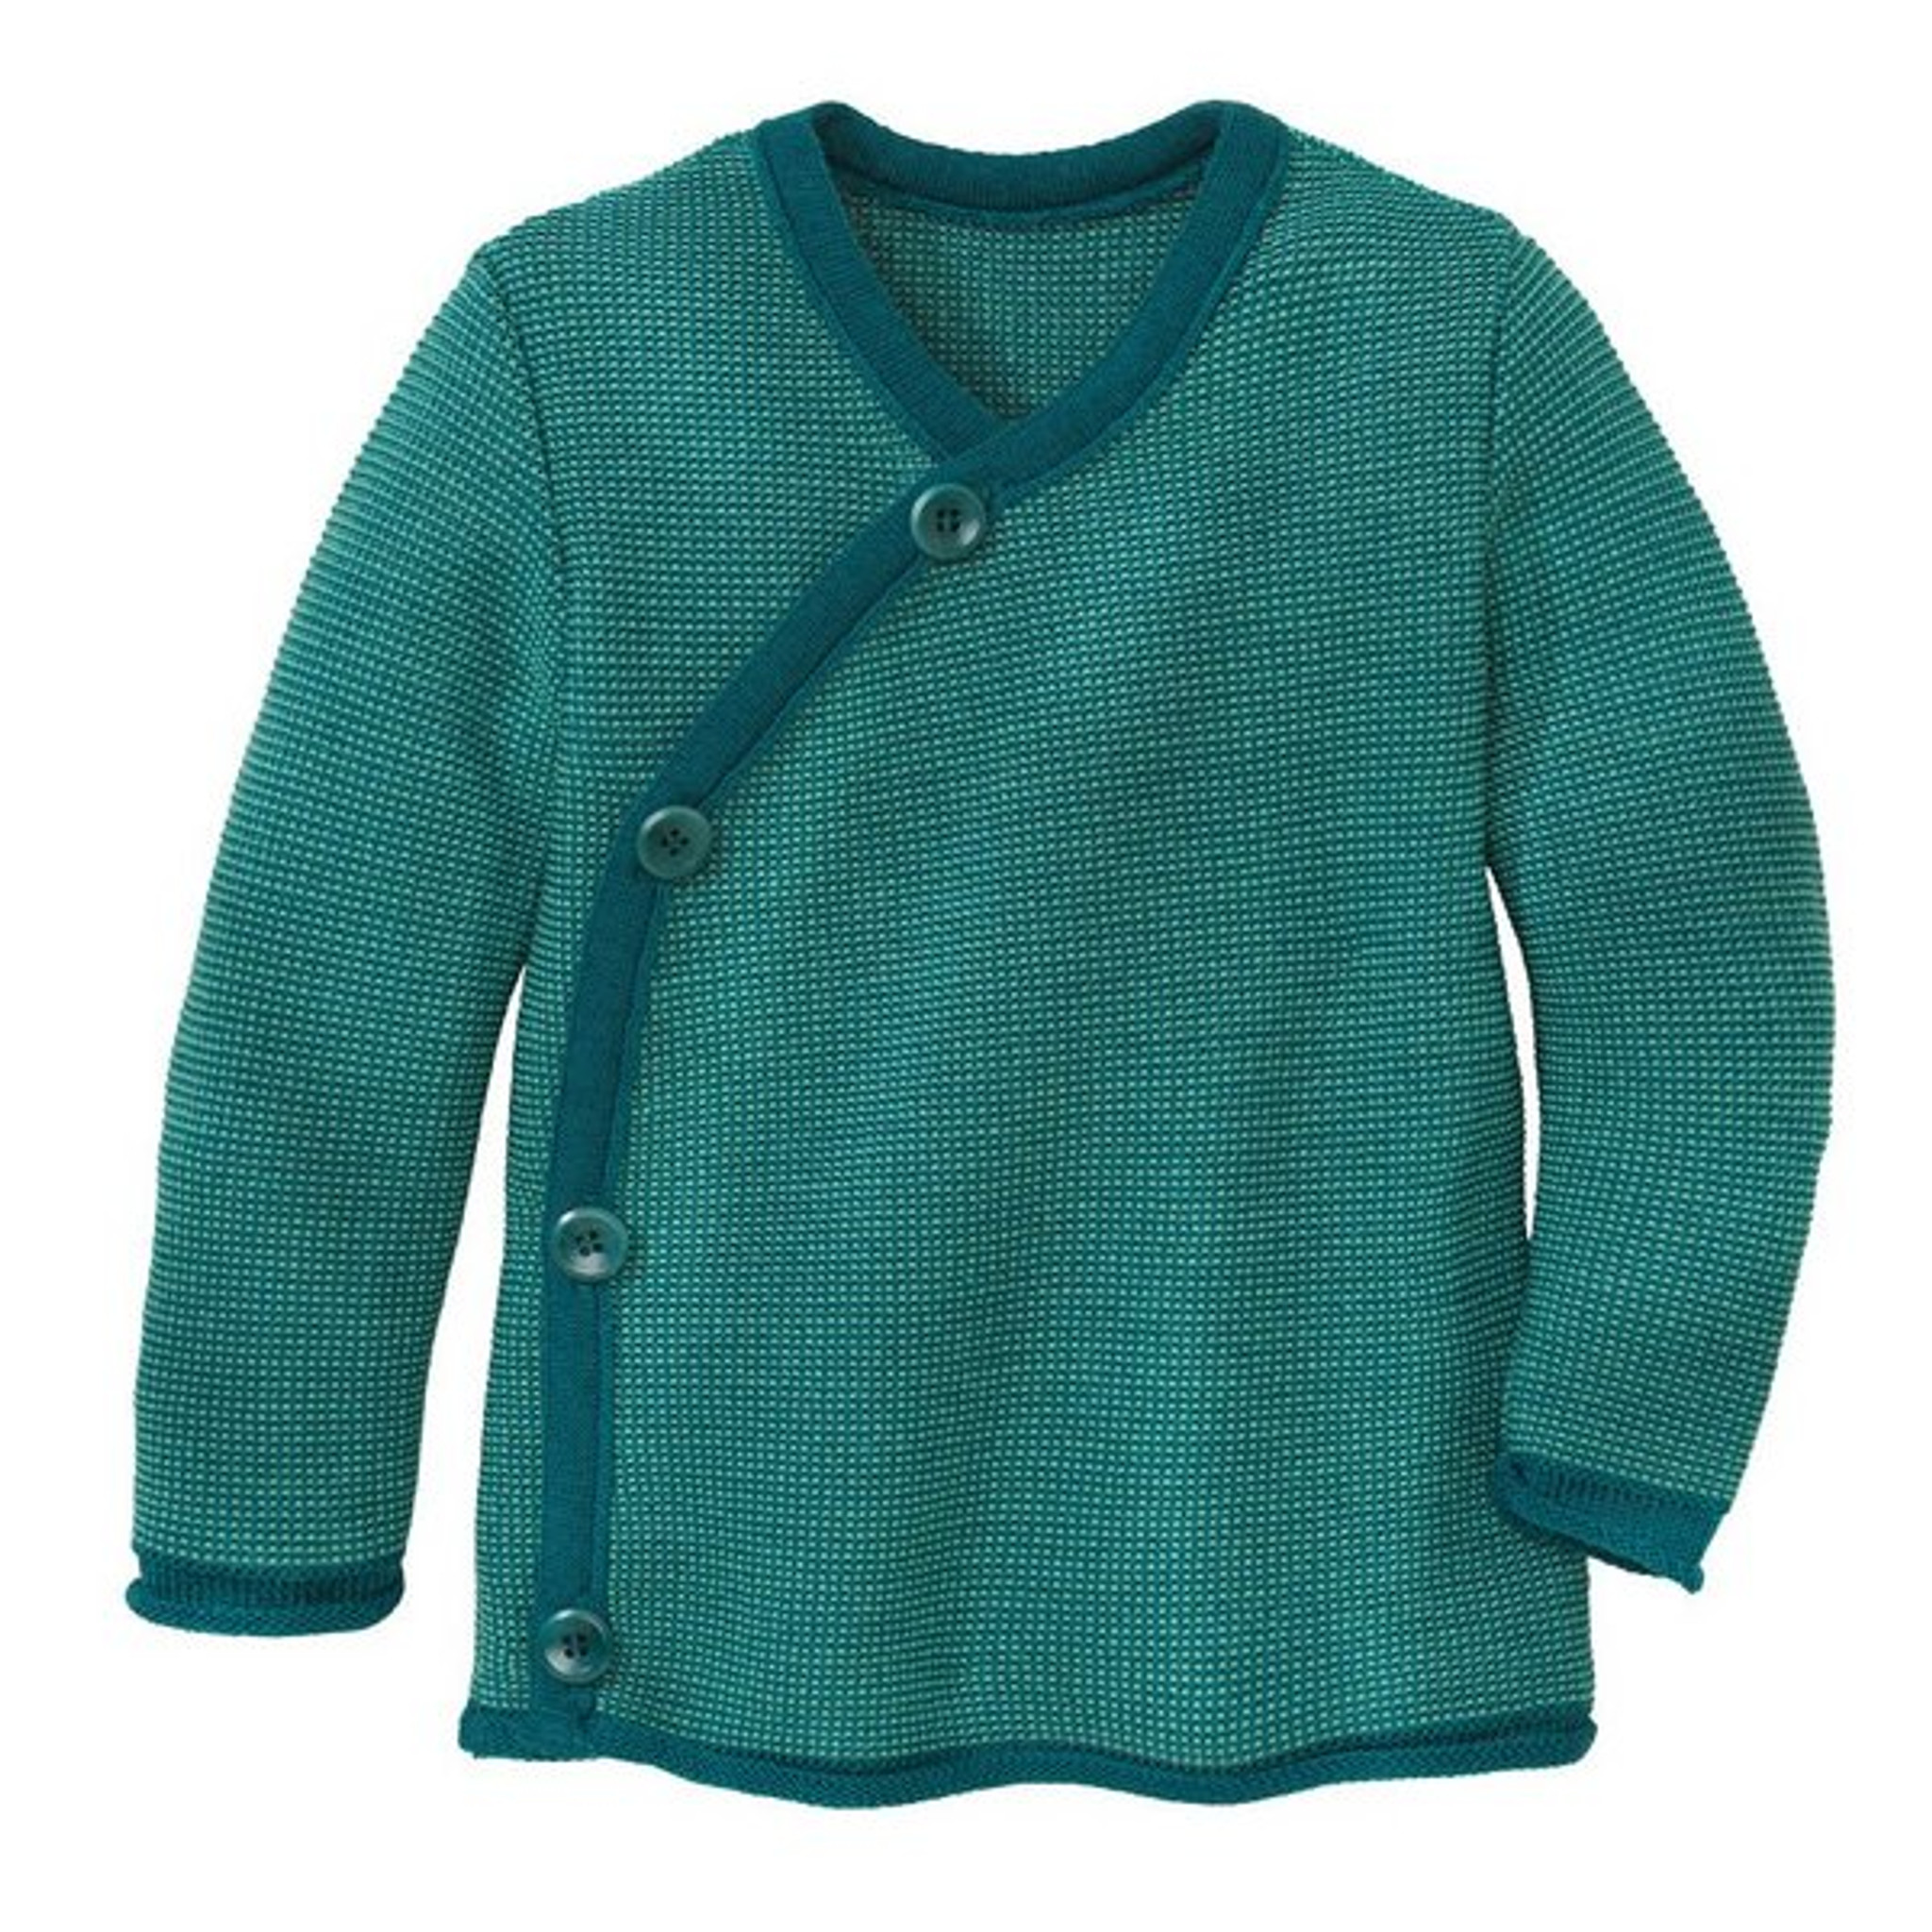 Disana Melange Jacket - Disana Canada - Merino Wool Clothing for Kids ...